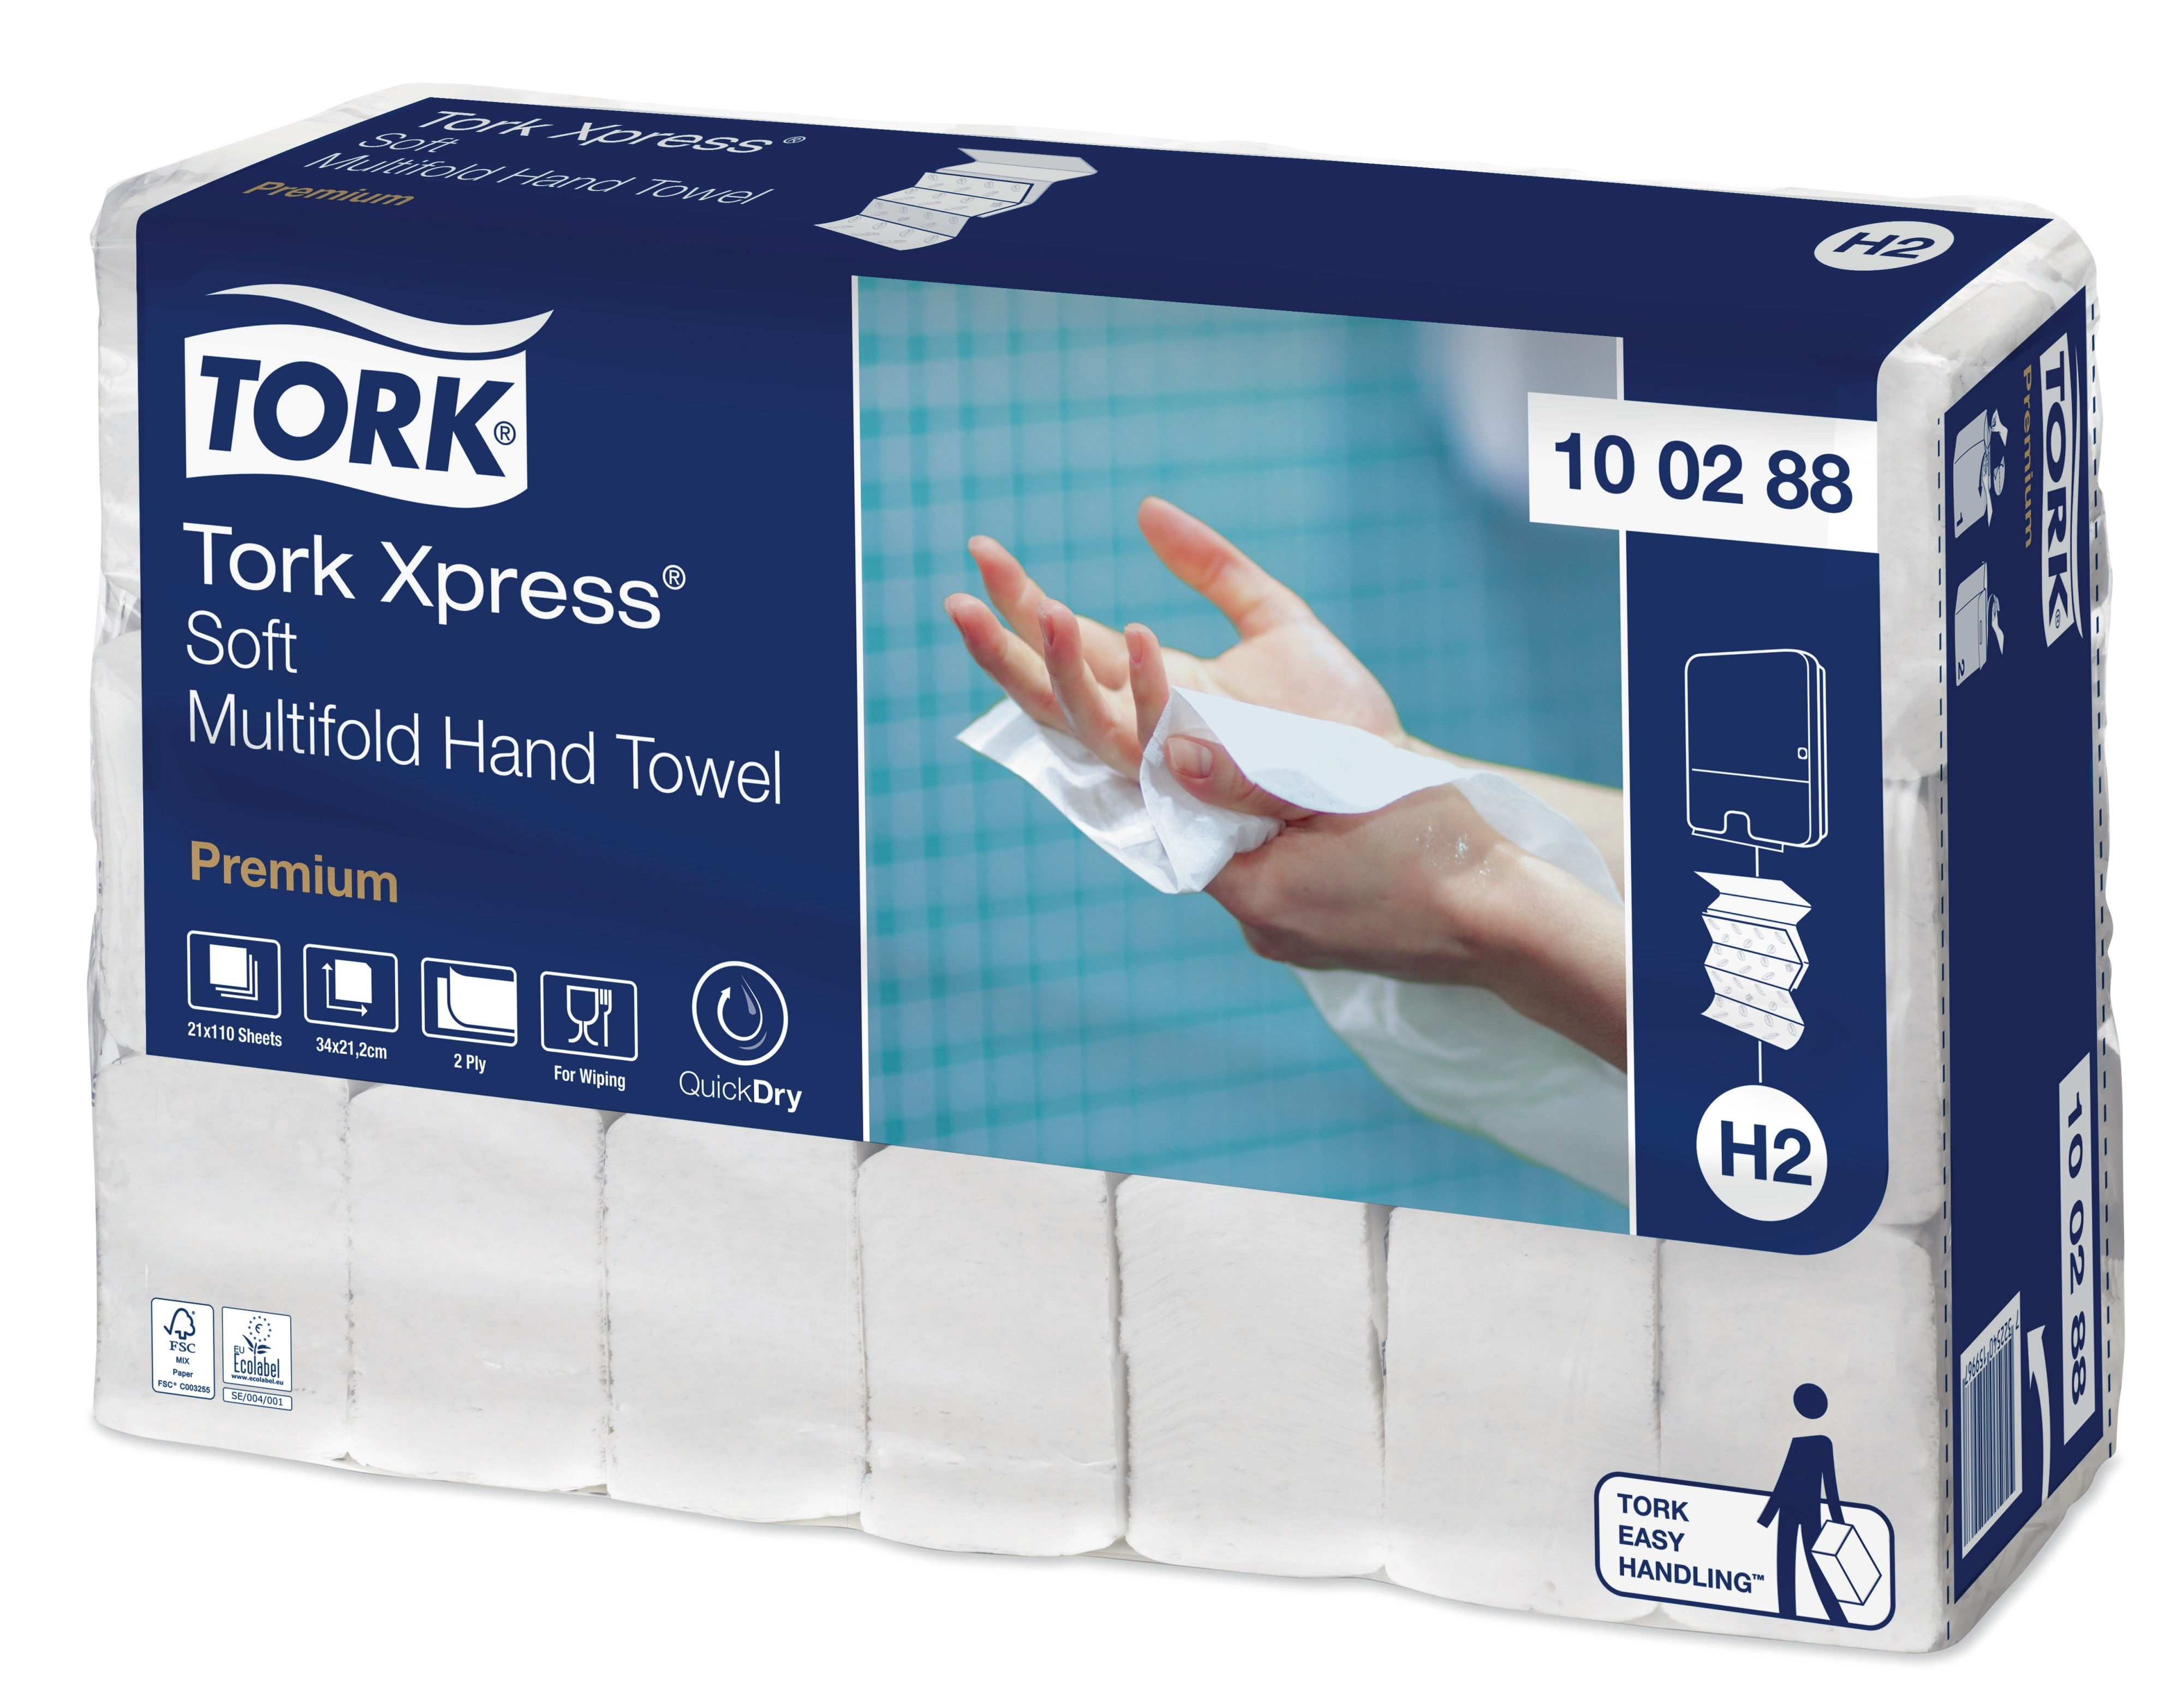 6: TORK Handklædeark H2 2-lag 2310 ark Hvid Xpress Multifold Premium (100288)